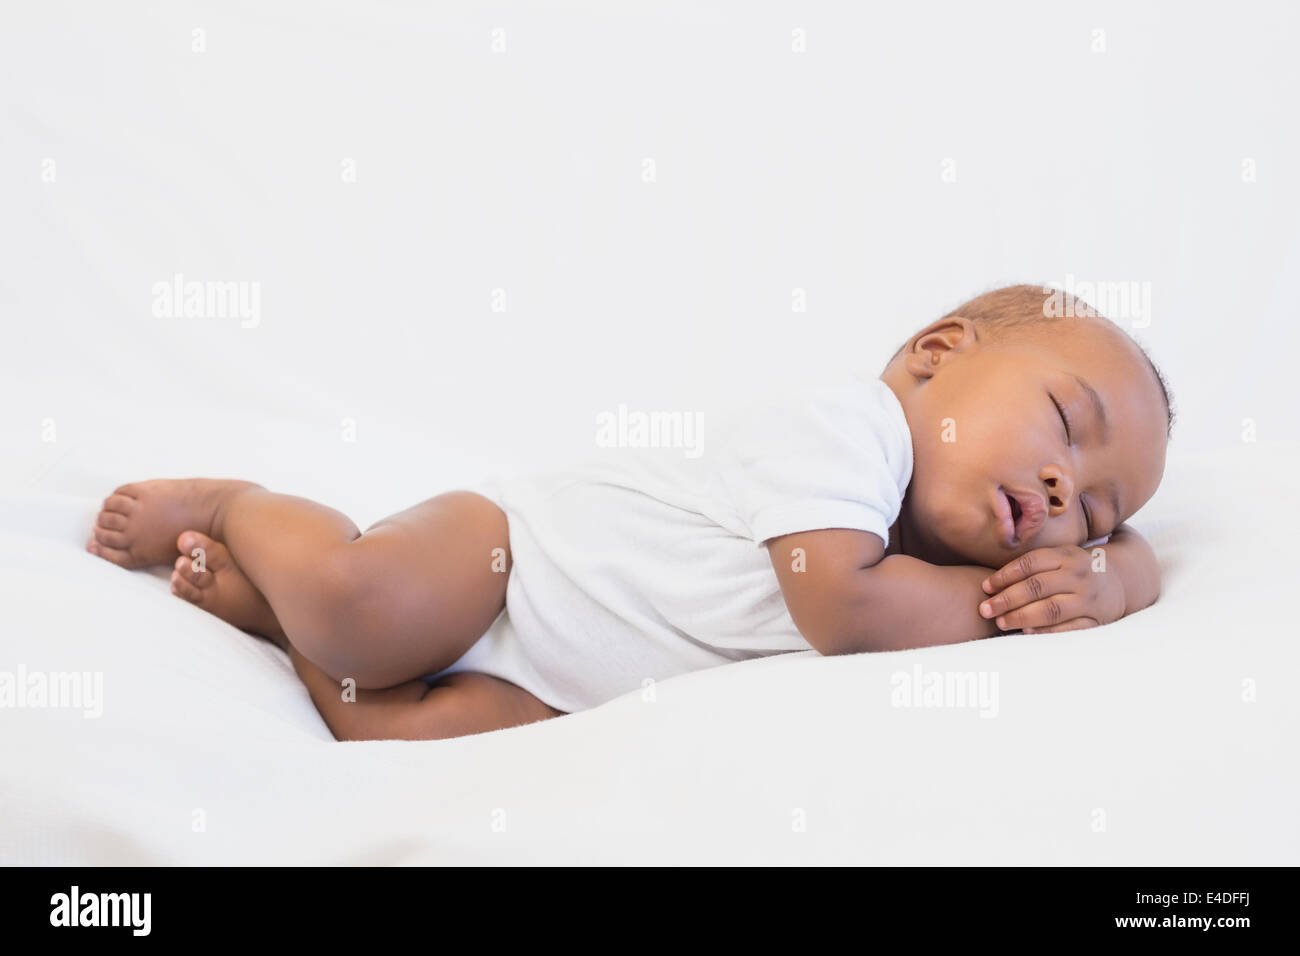 Adorable baby boy sleeping peacefully Stock Photo